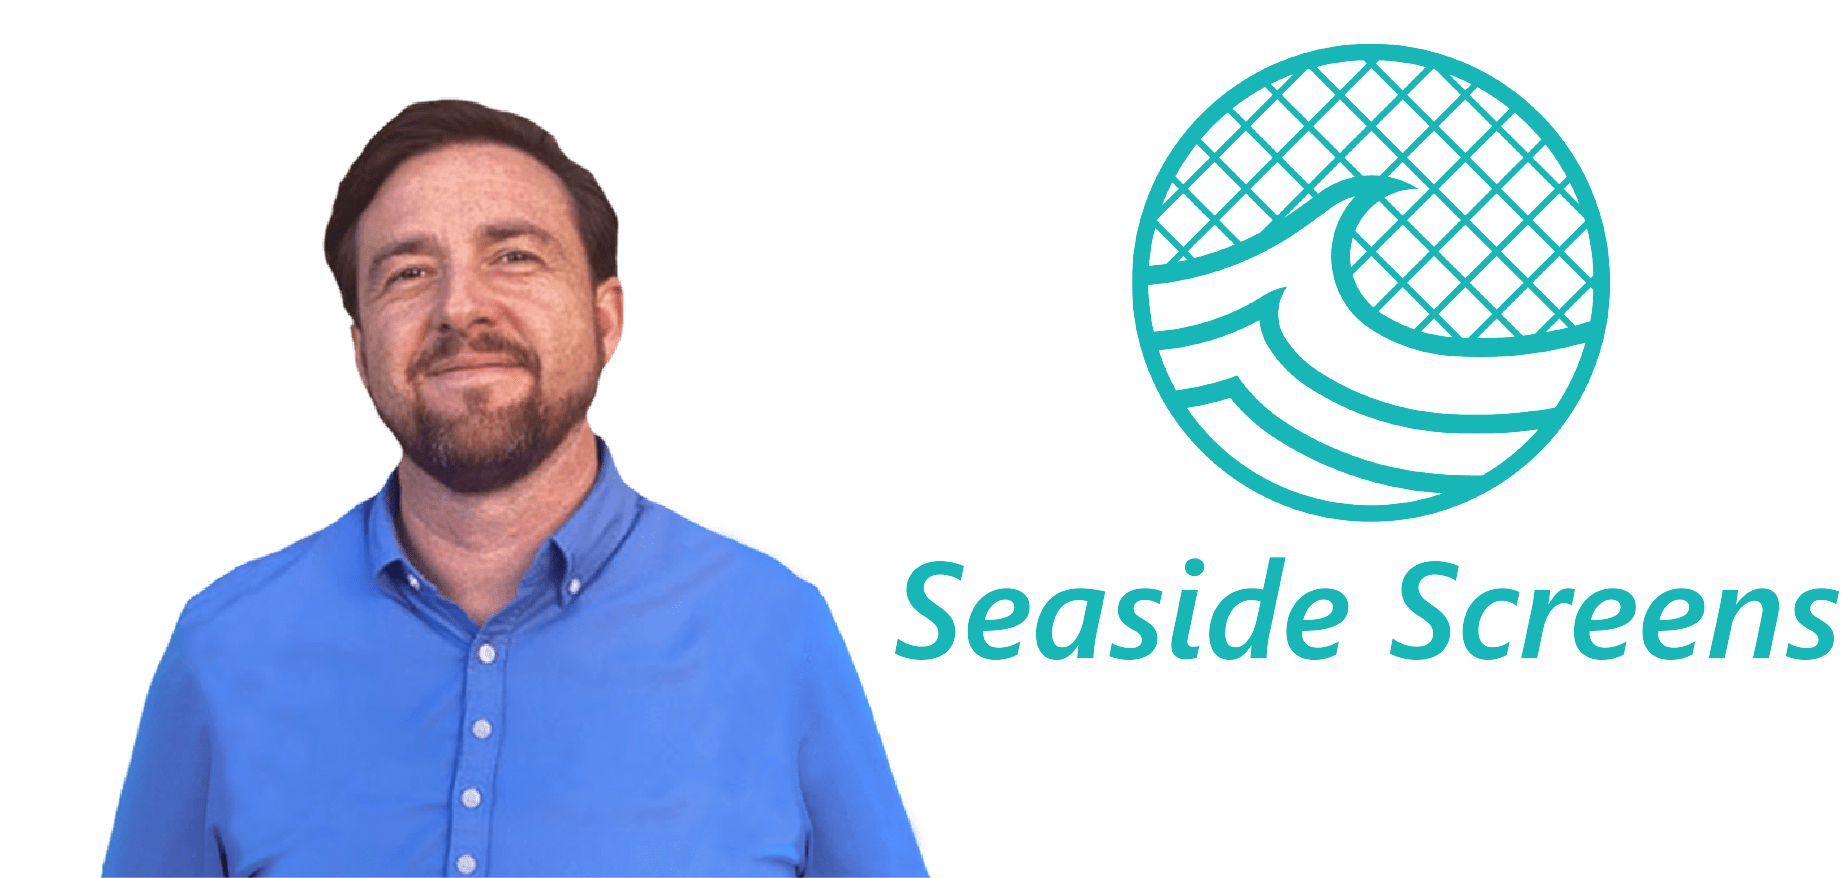 Jay Bond owner of Seaside Screens Prowler Proof certified security screen installer